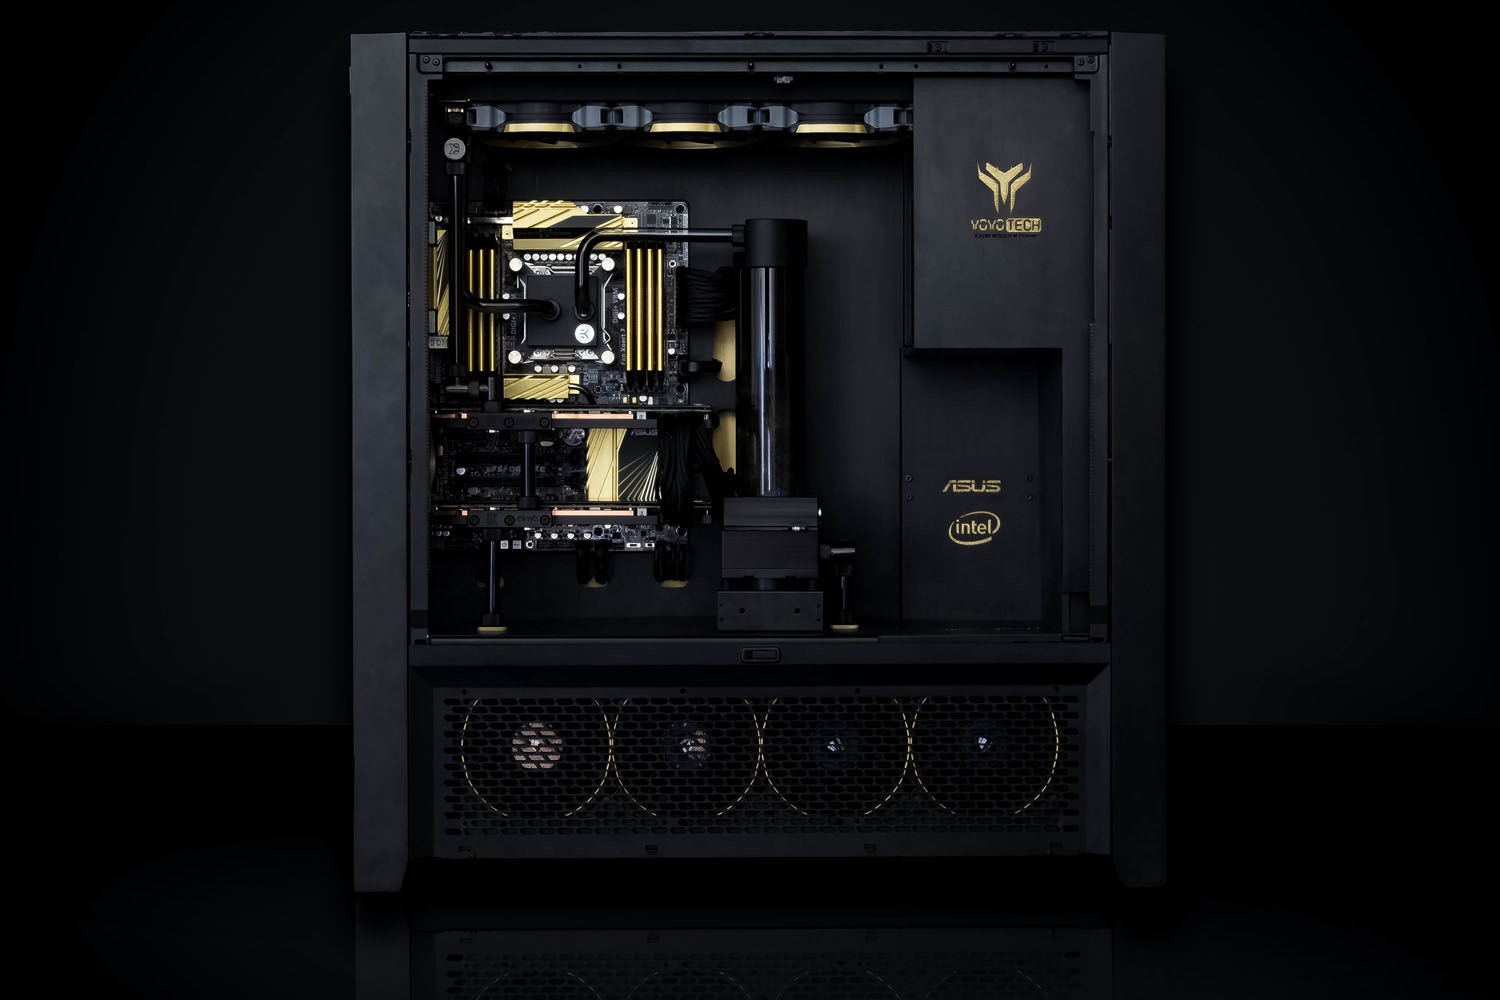 Yoyotech XDNA Aurum 24K most expensive PC